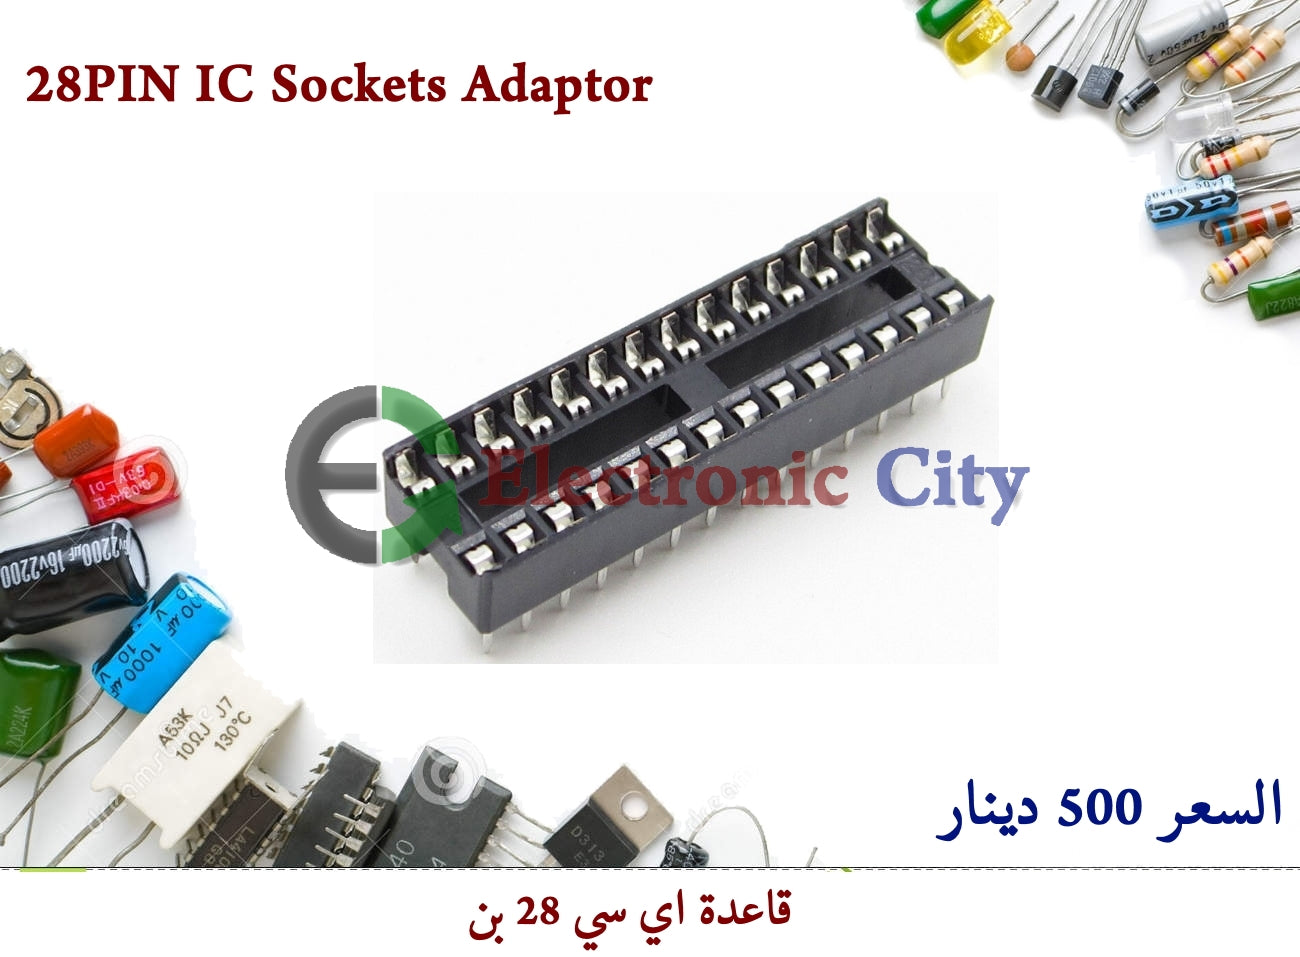 28PIN IC Sockets Adaptor